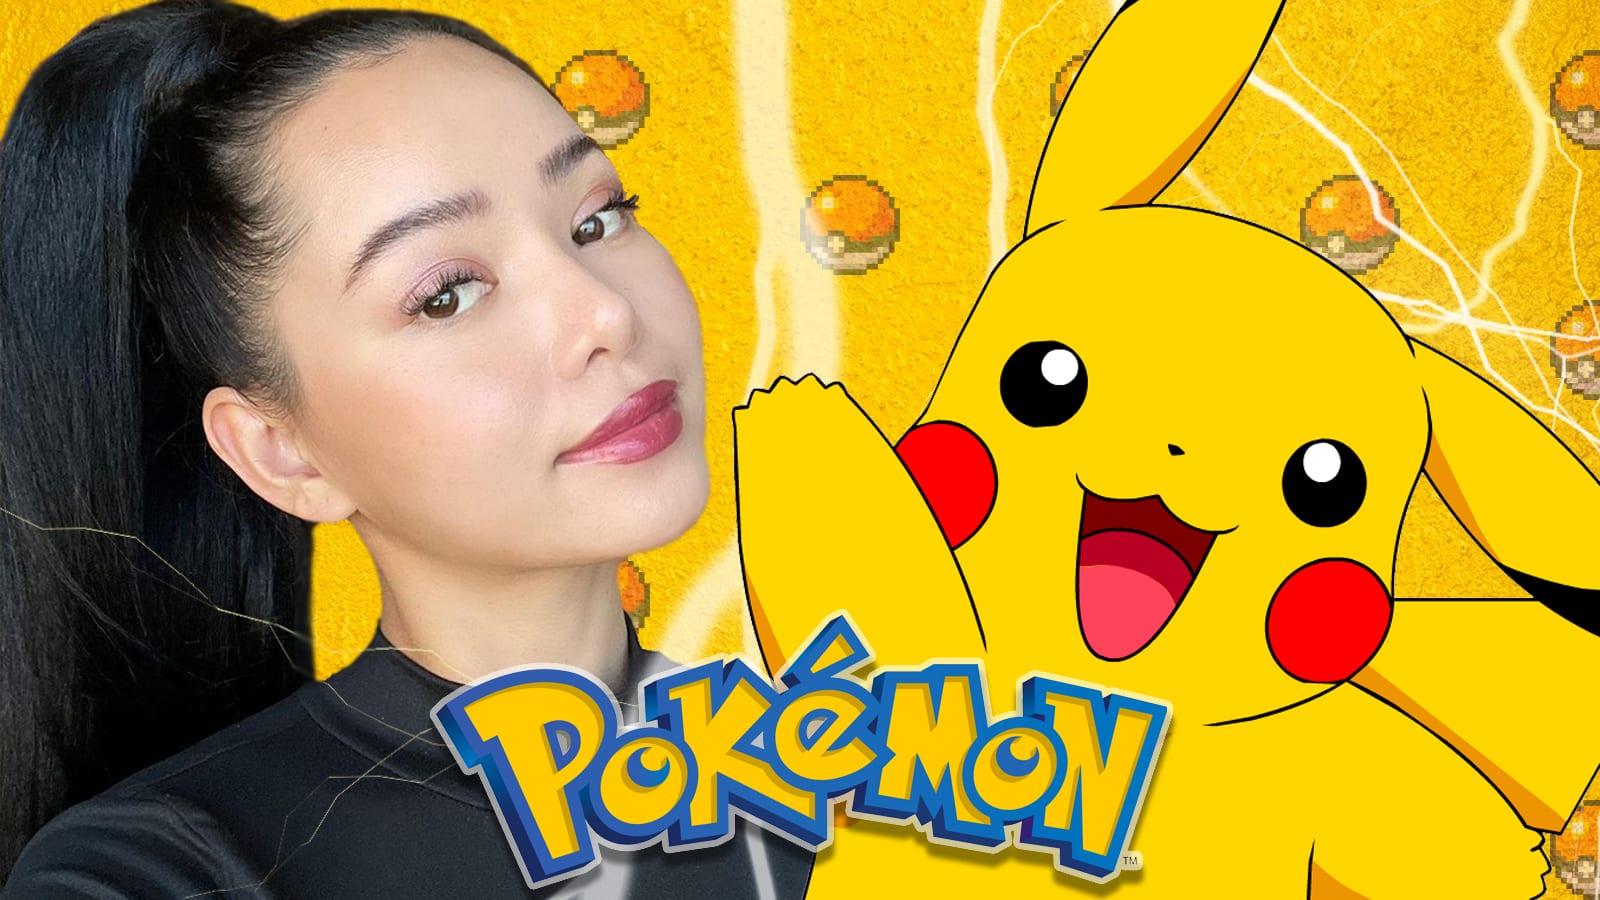 Bella Poarch wins the internet with Pikachu costume in viral Pokemon TikTok  - Dexerto